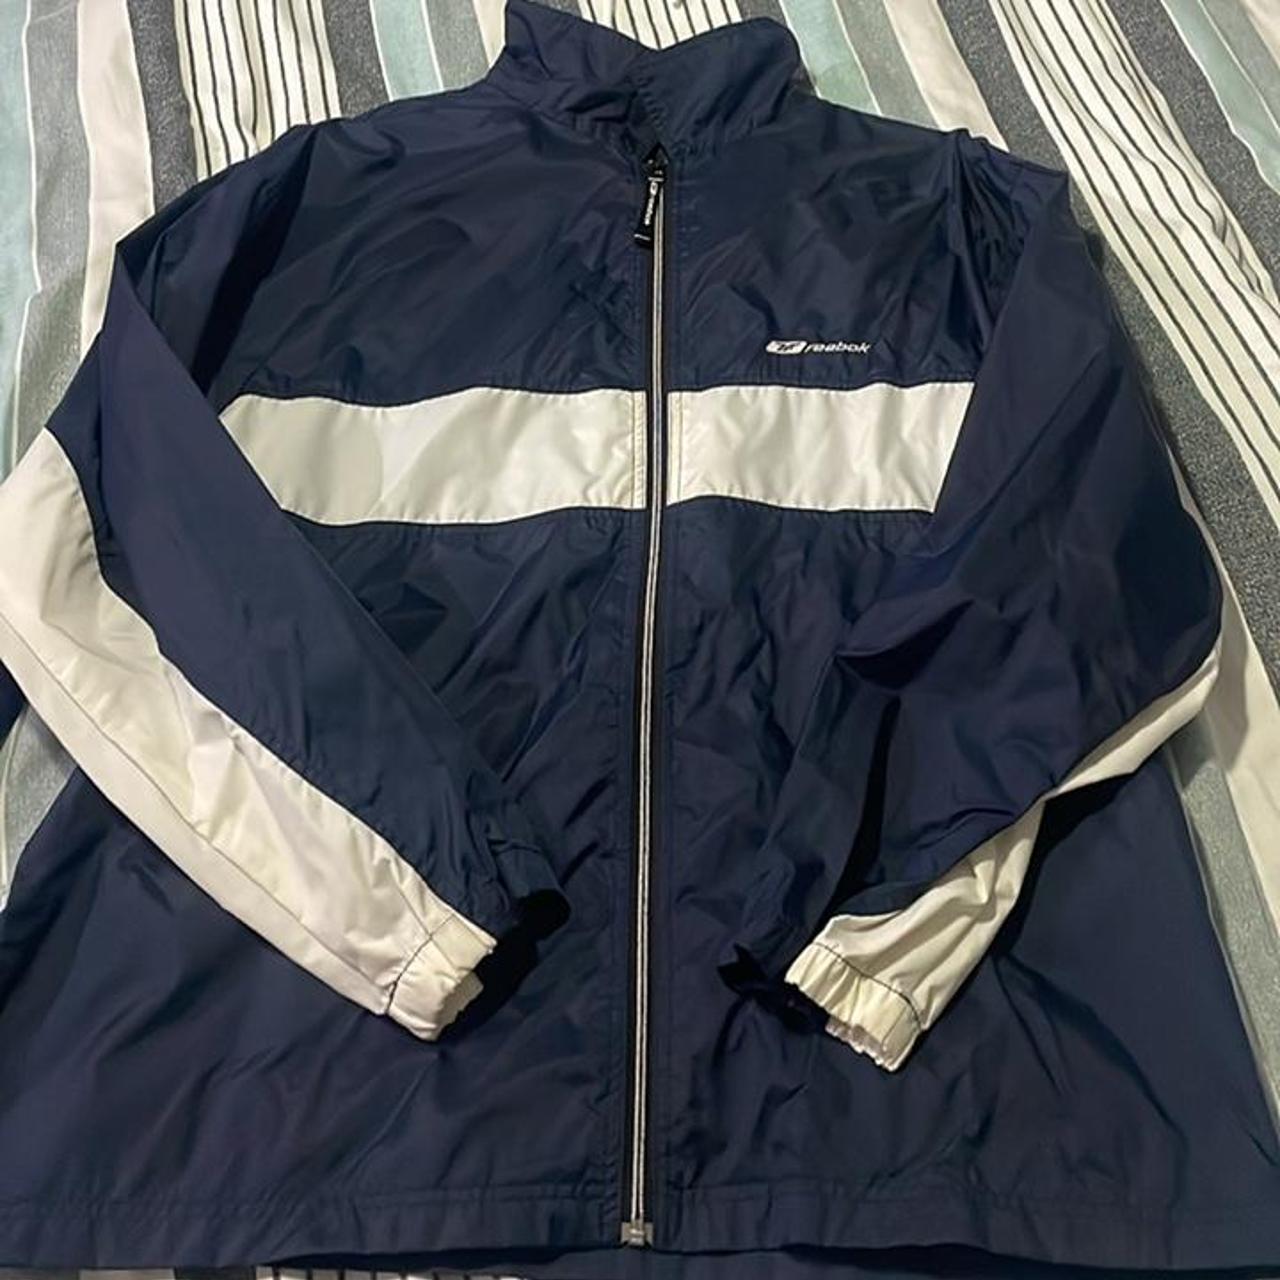 Vintage Reebok Windbreaker Jacket Size Large Nothing... - Depop